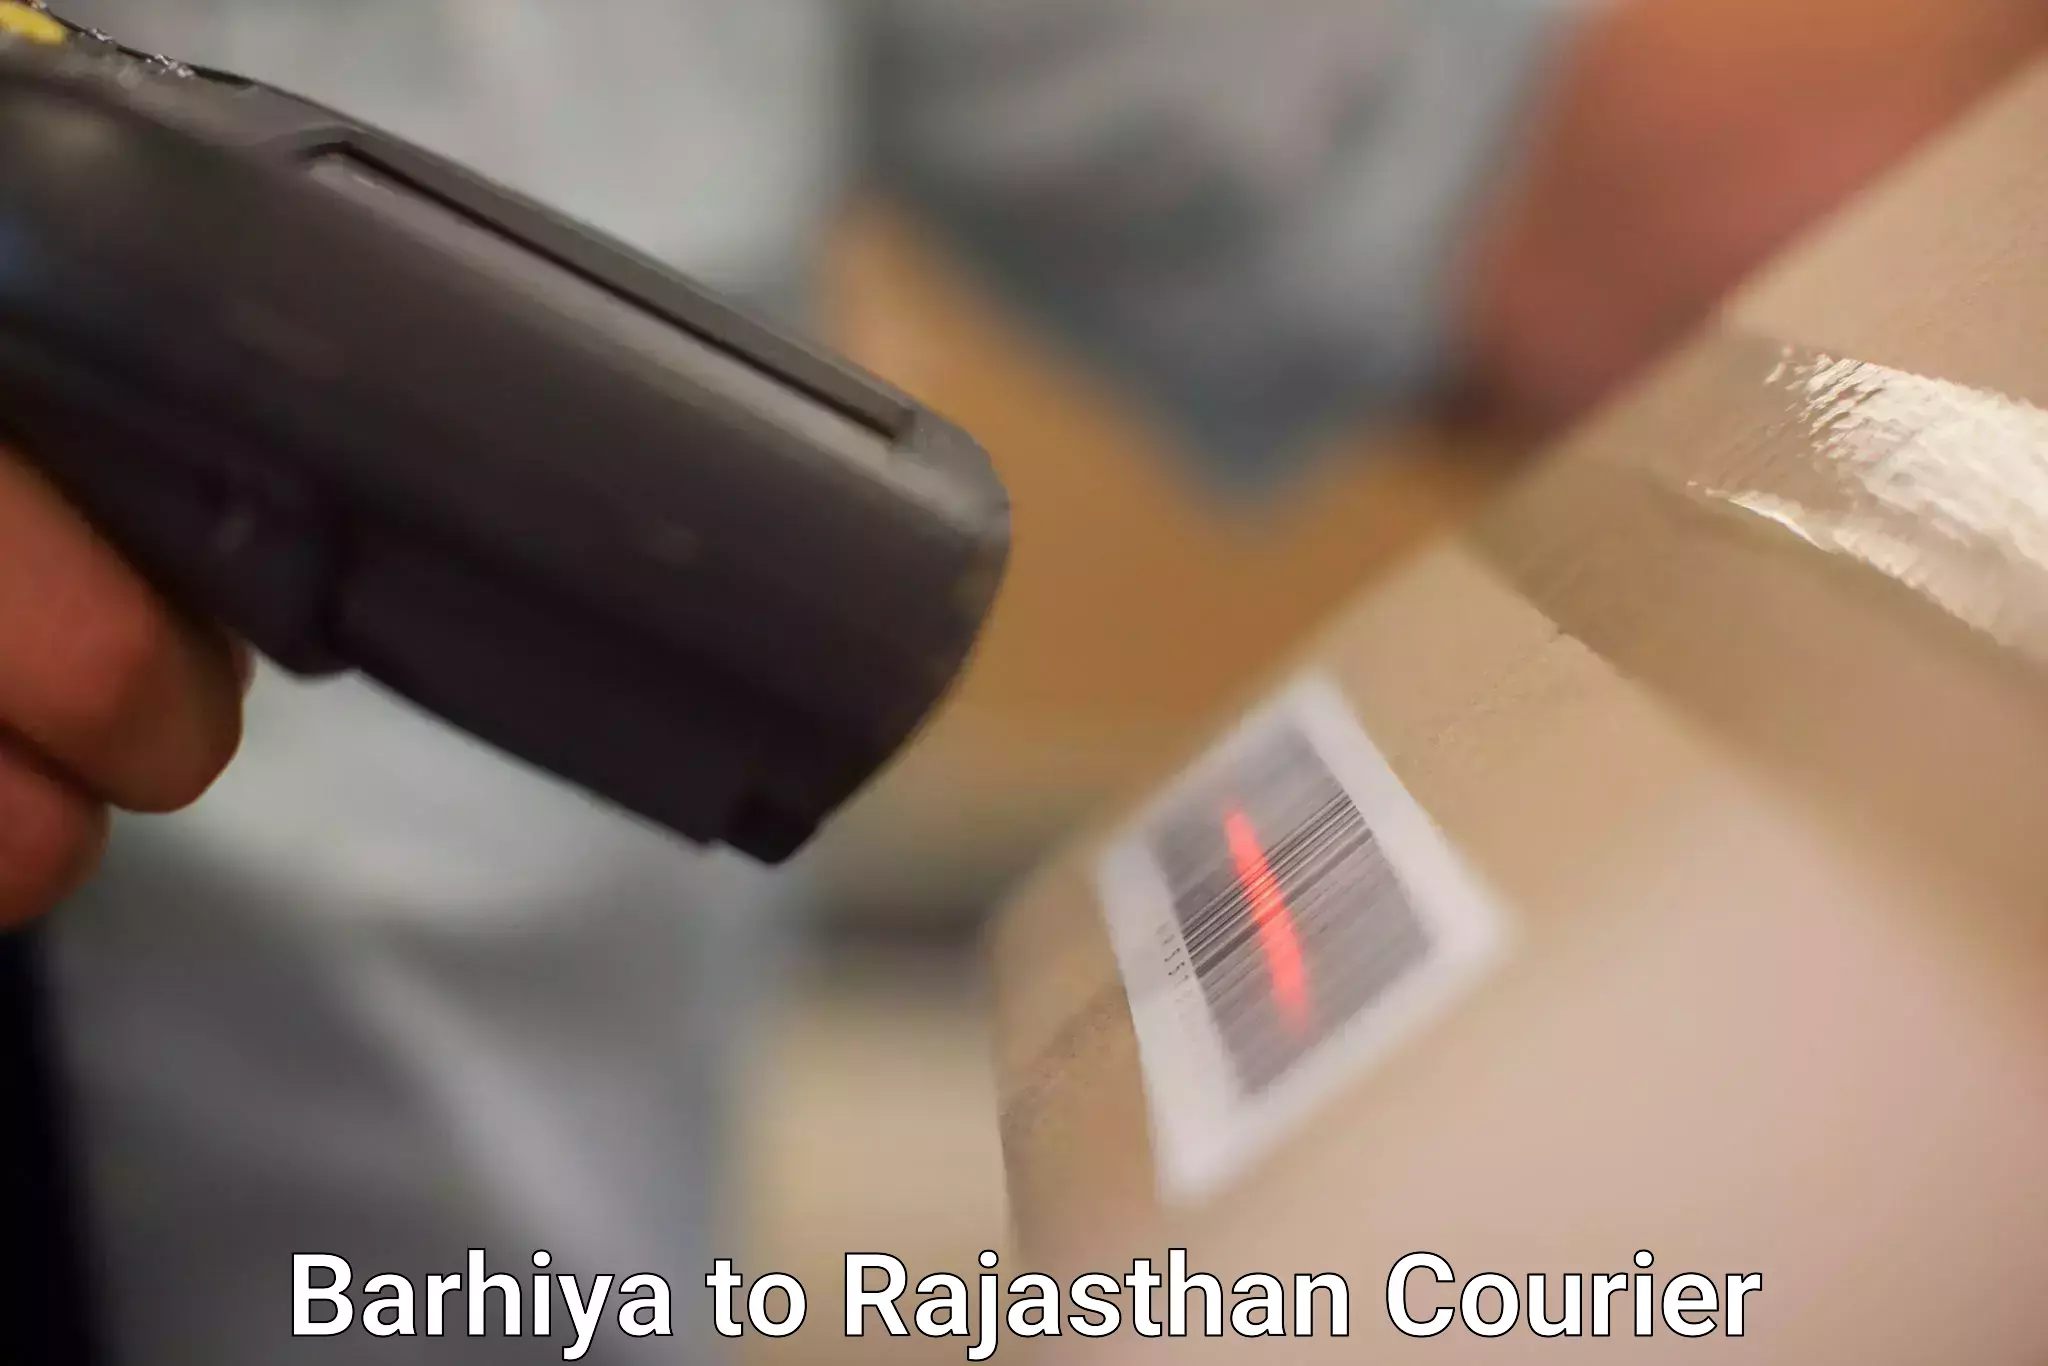 Professional courier handling Barhiya to Gogunda